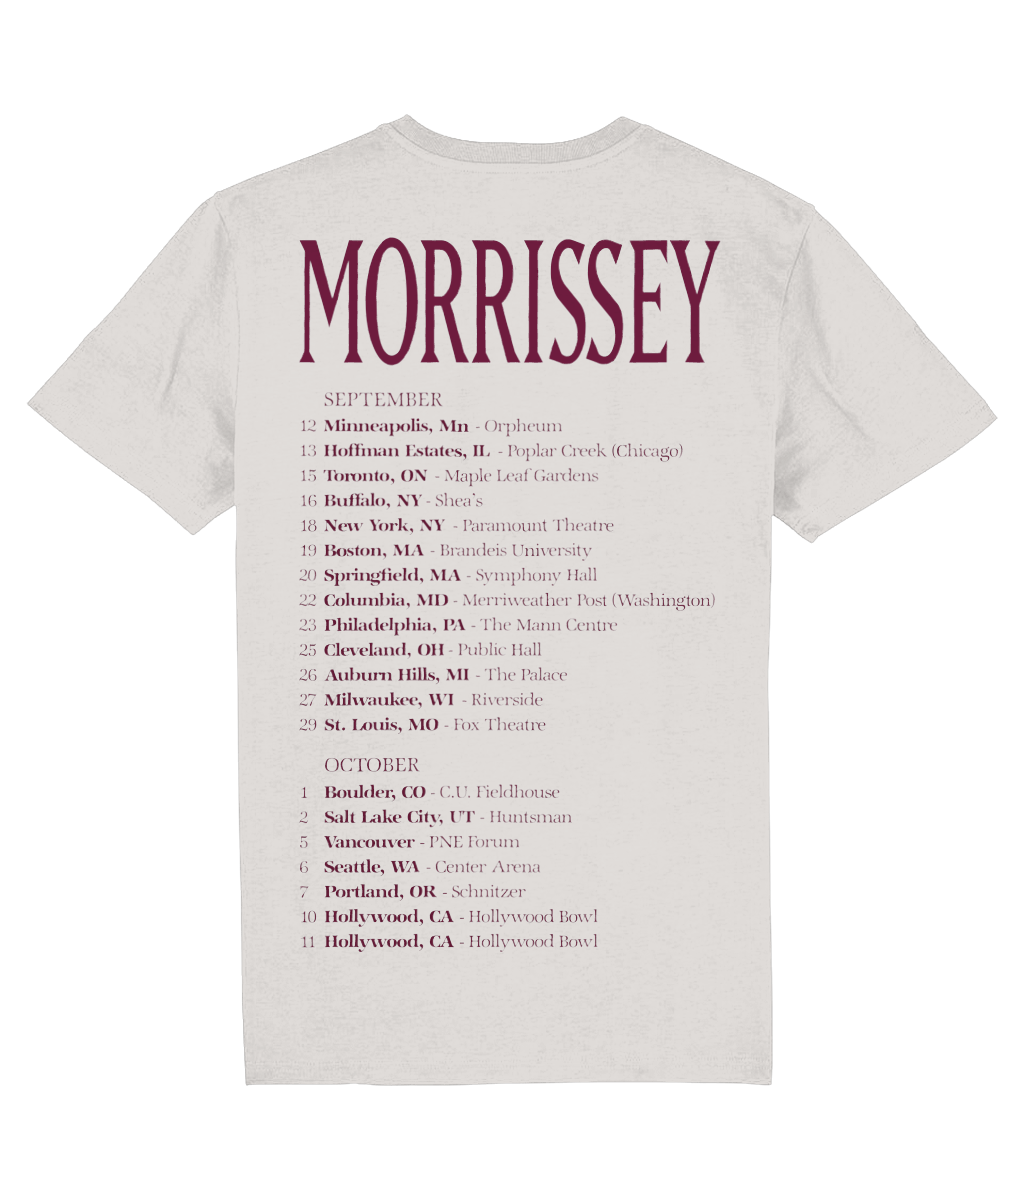 Morrissey - Your Arsenal Tour -1992 - Skinhead Girls VW/ OW